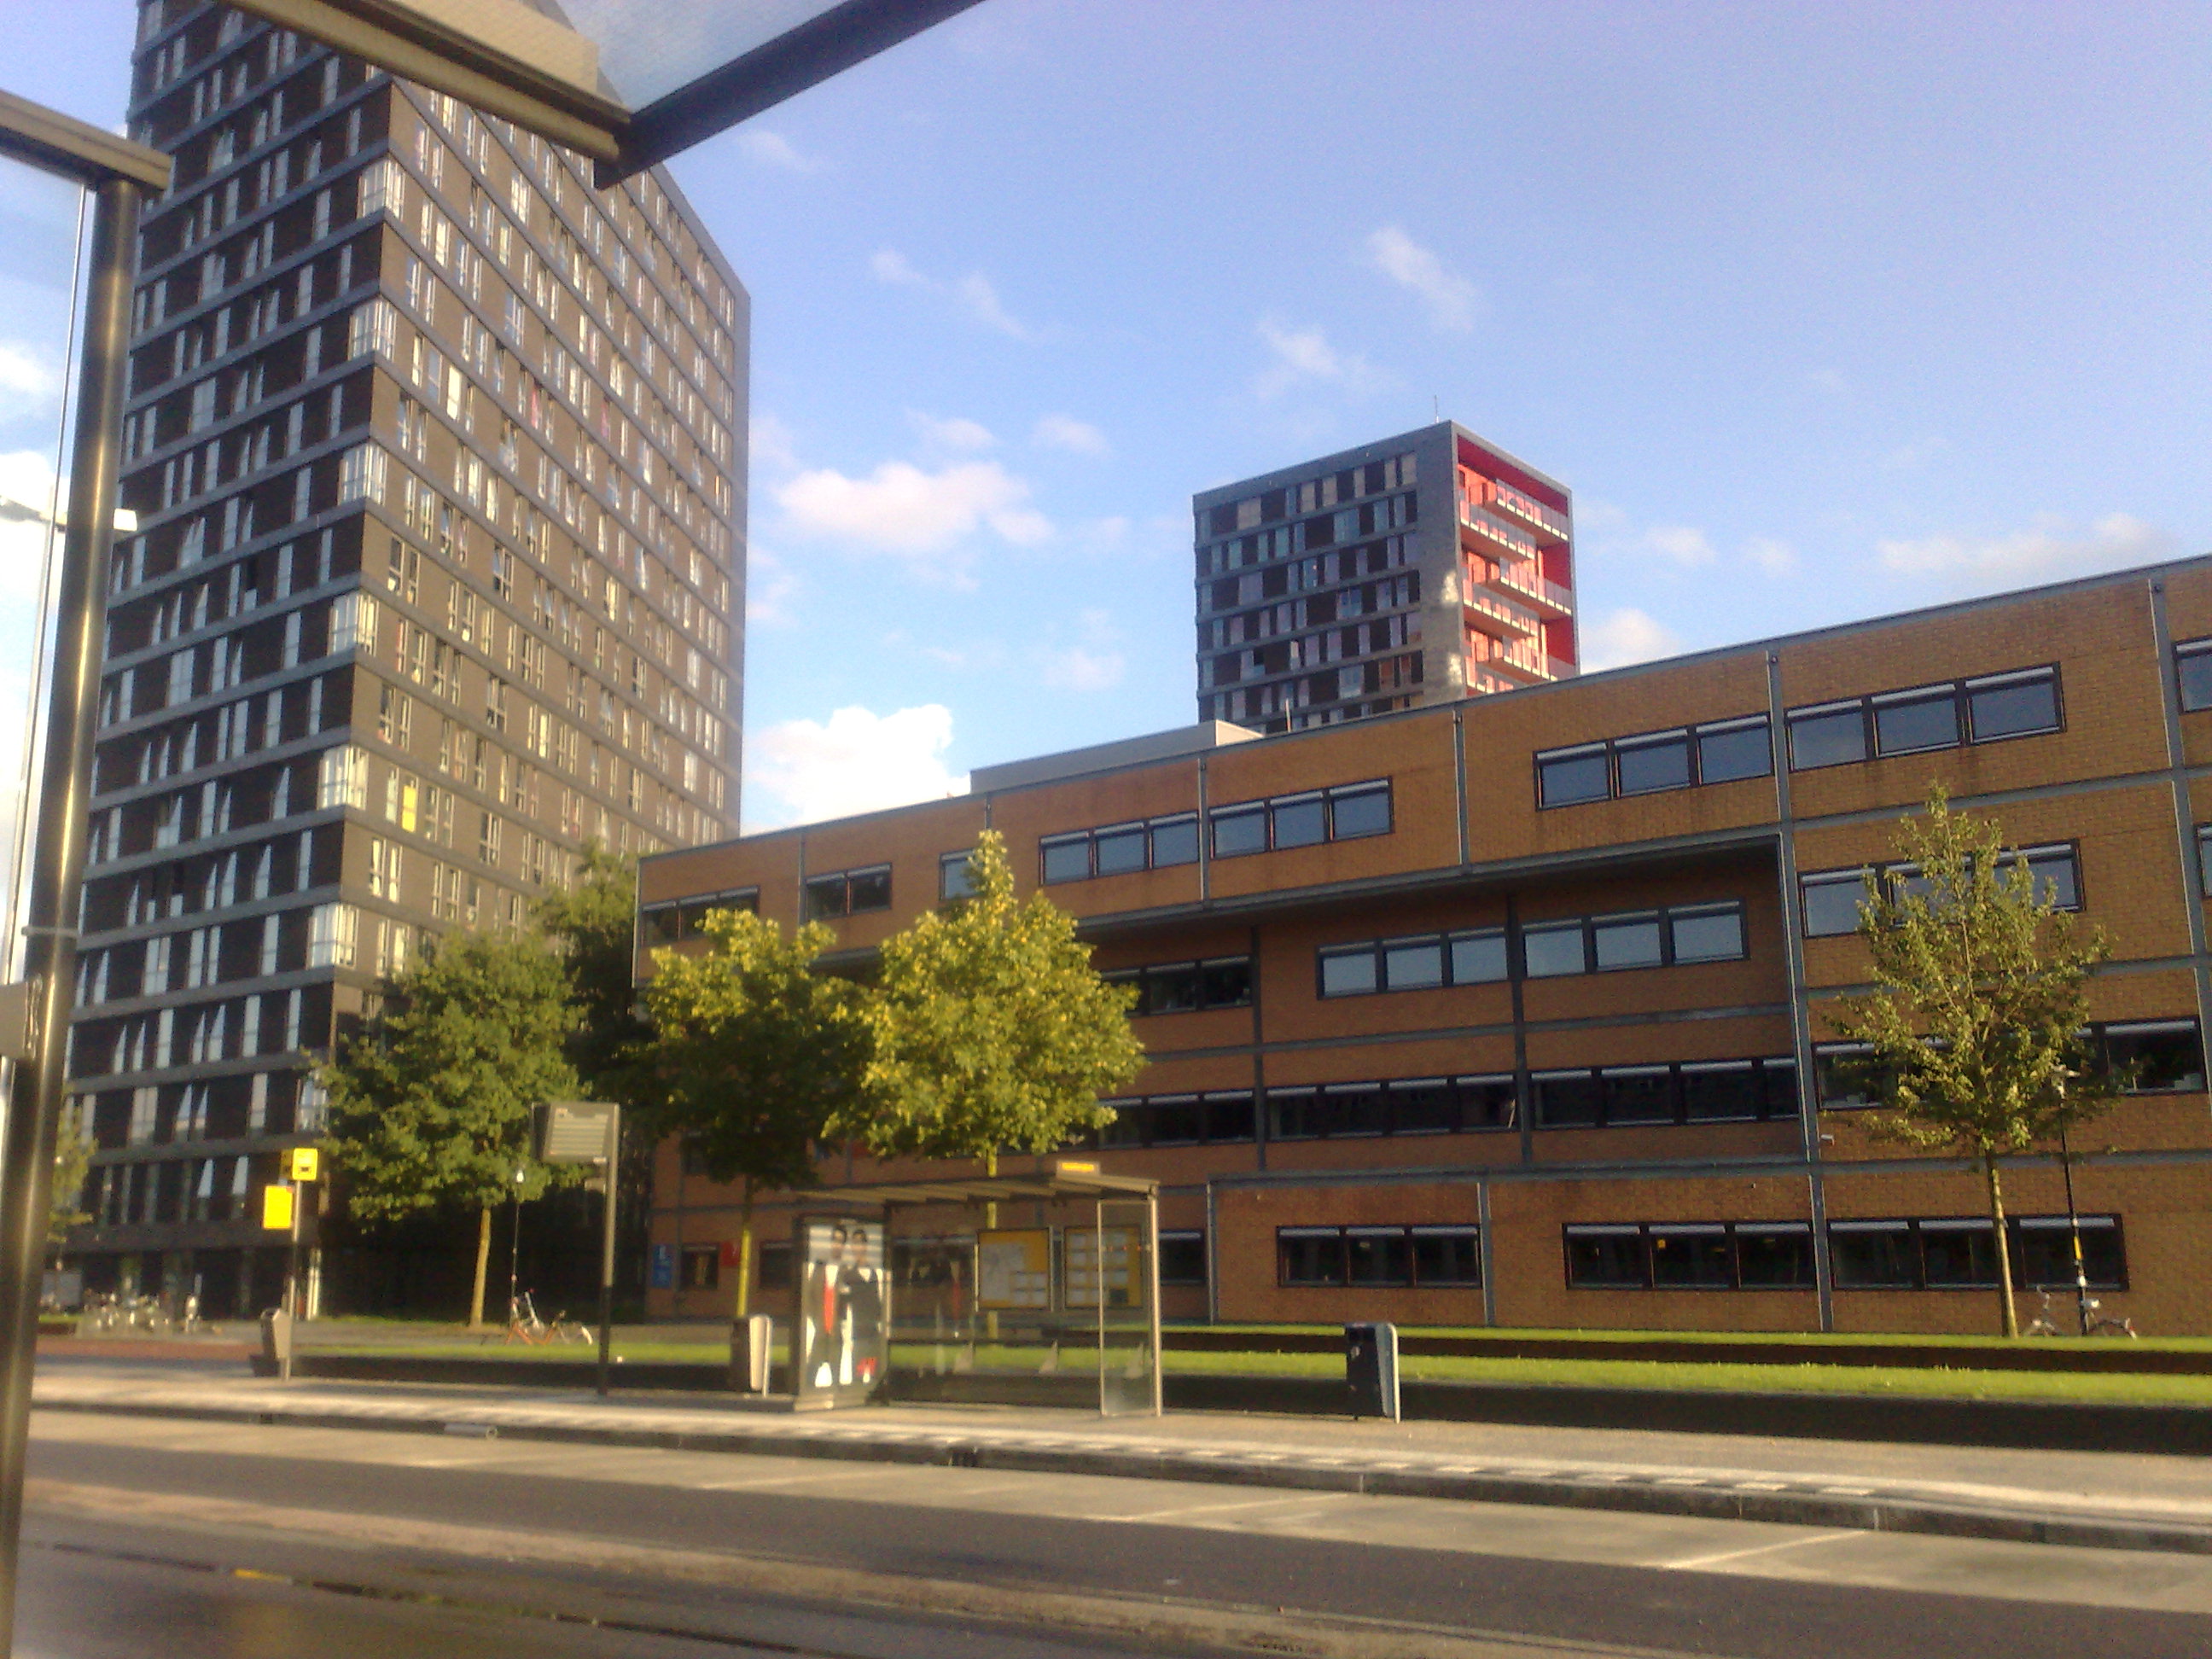 Universiteit Utrecht - 28/08/2011 - 20:00